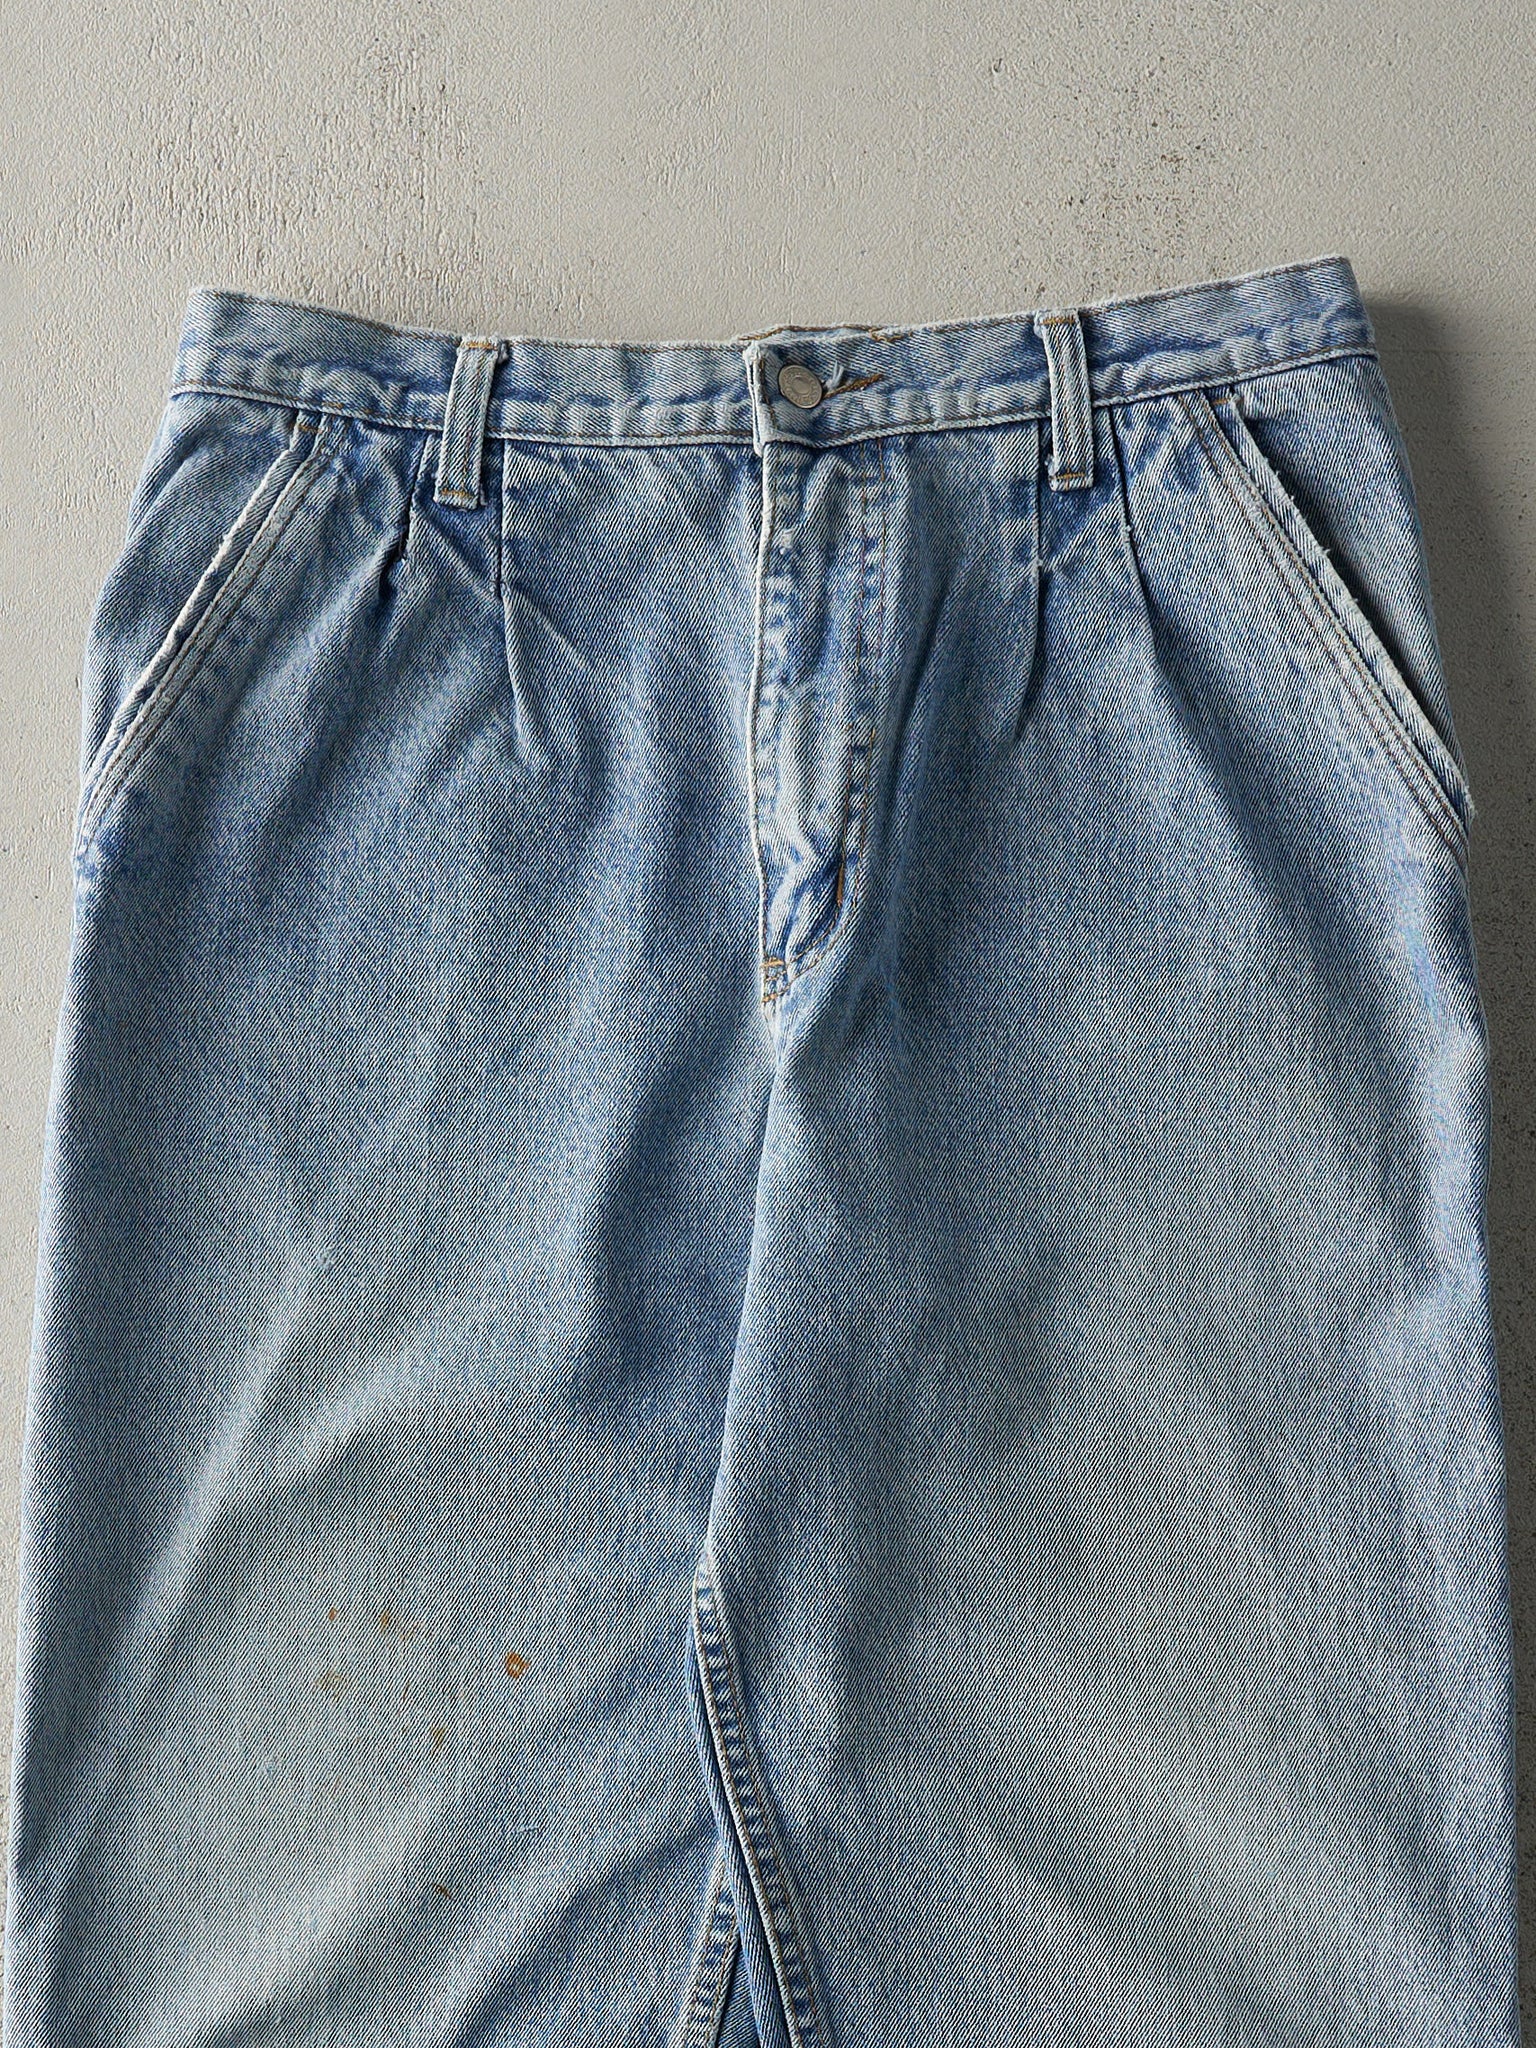 Vintage 90s Light Wash Levi's 501 Embossed Jeans (32x29)